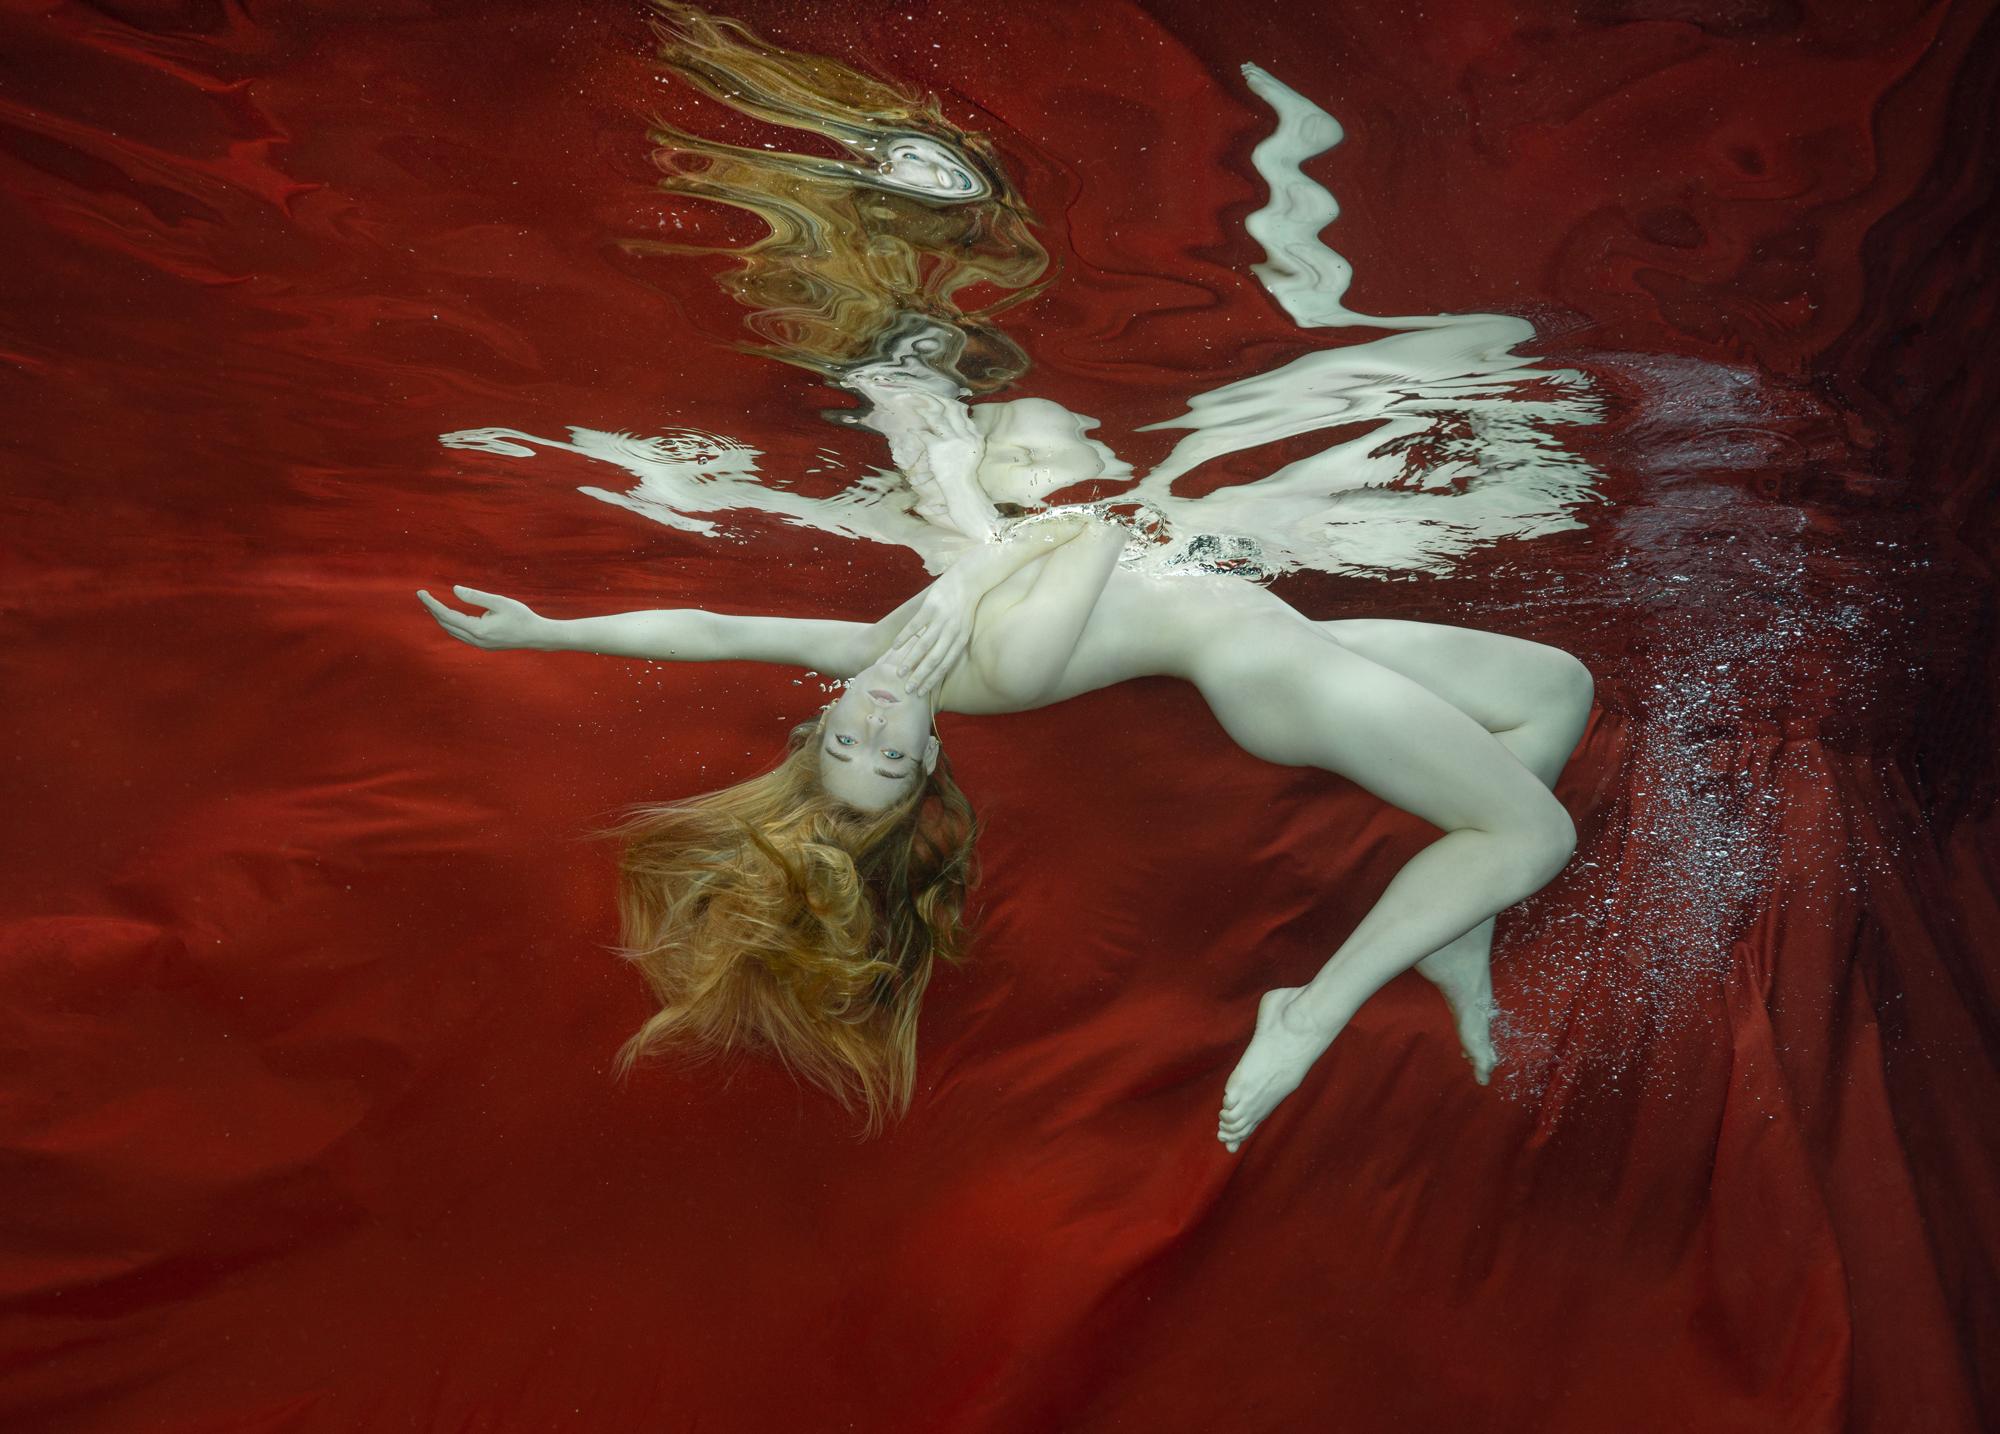 Alex Sher Figurative Photograph - Liquid Fire - underwater nude photograph - archival pigment print